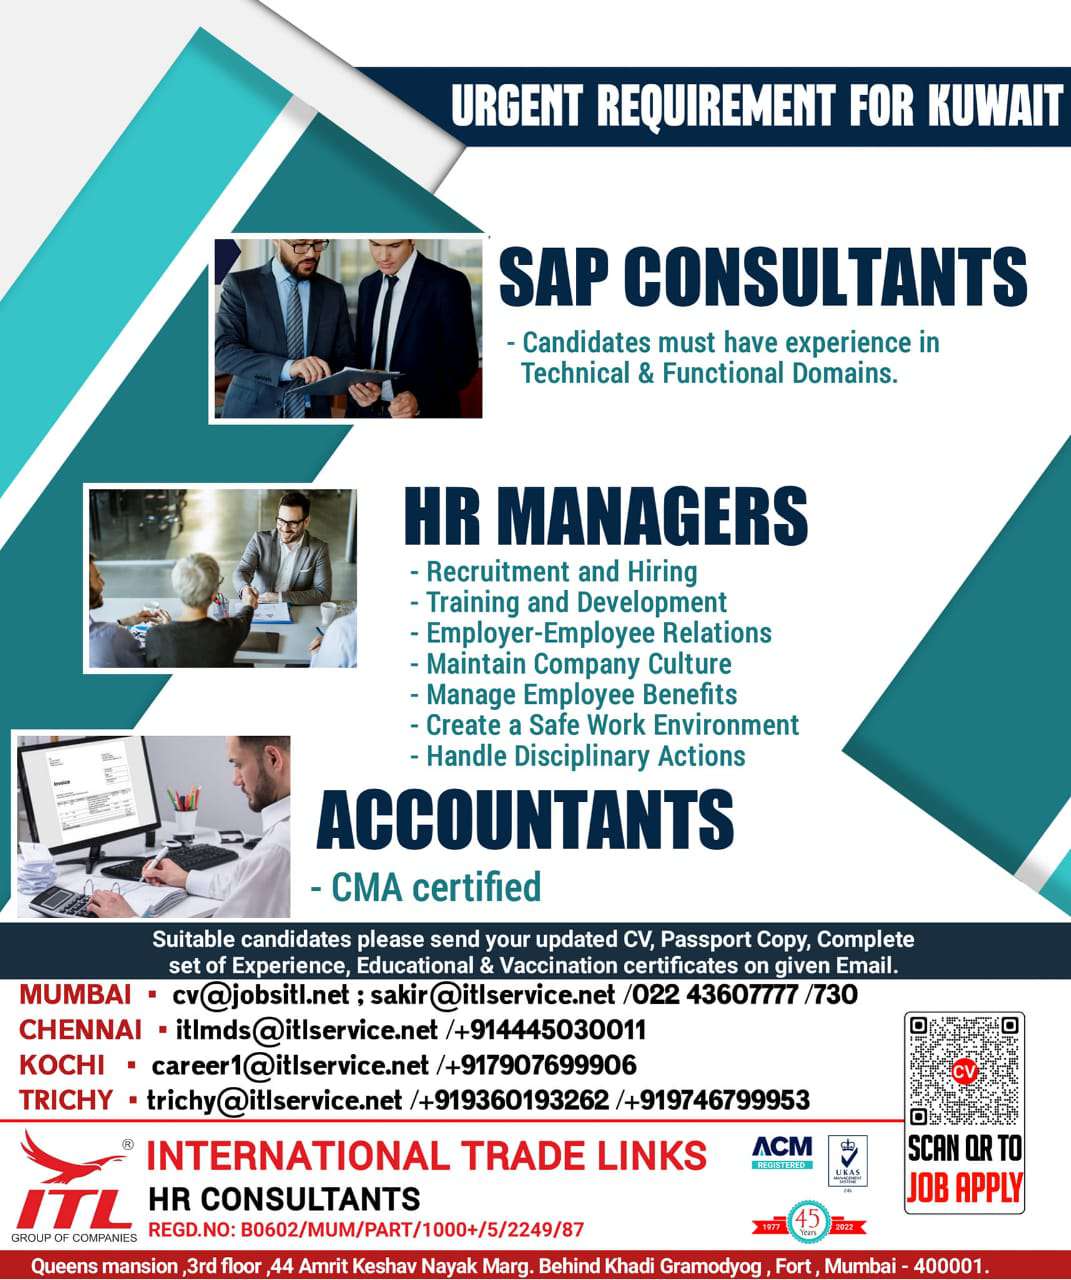 Kuwait jobs  SAP  HR manager  Accountants